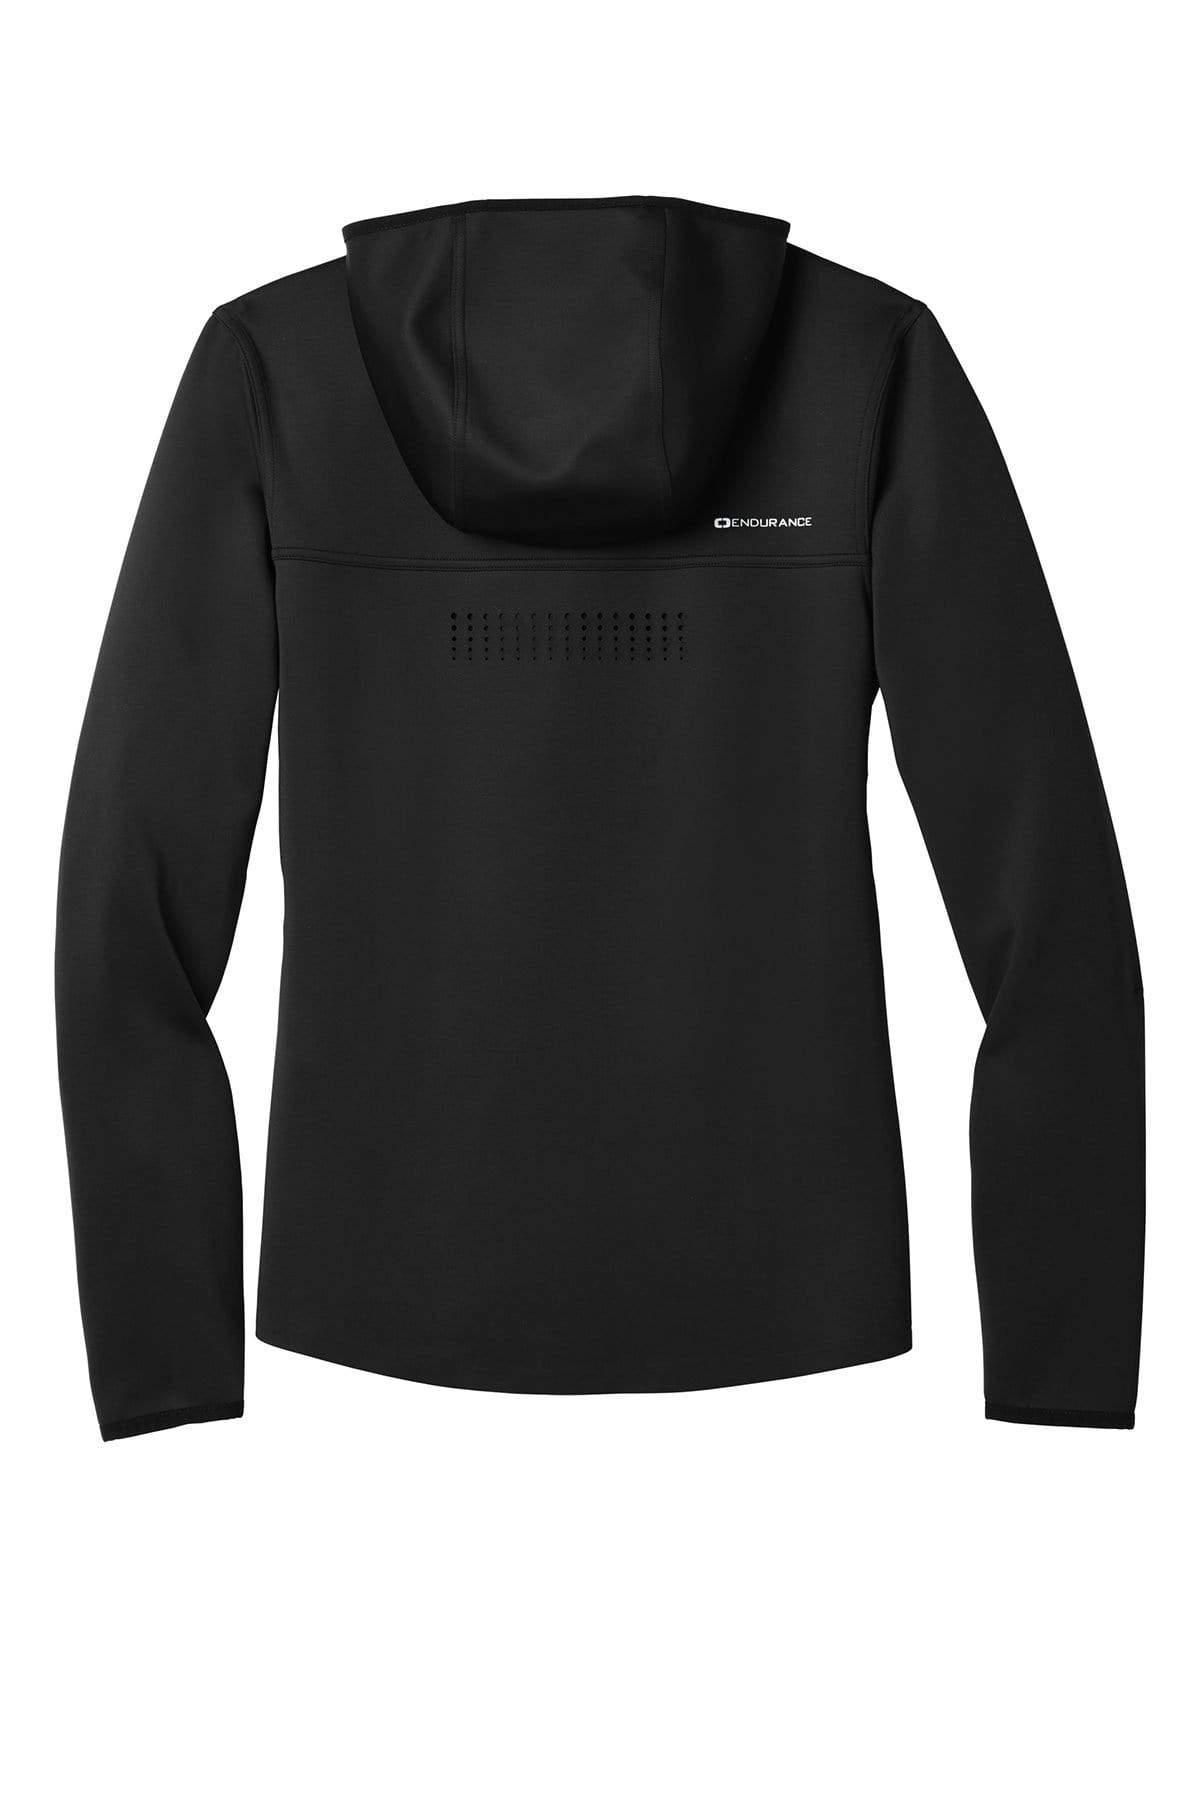 Heather Grey / XS Custom OGIO ENDURANCE Stealth Full-Zip Jacket